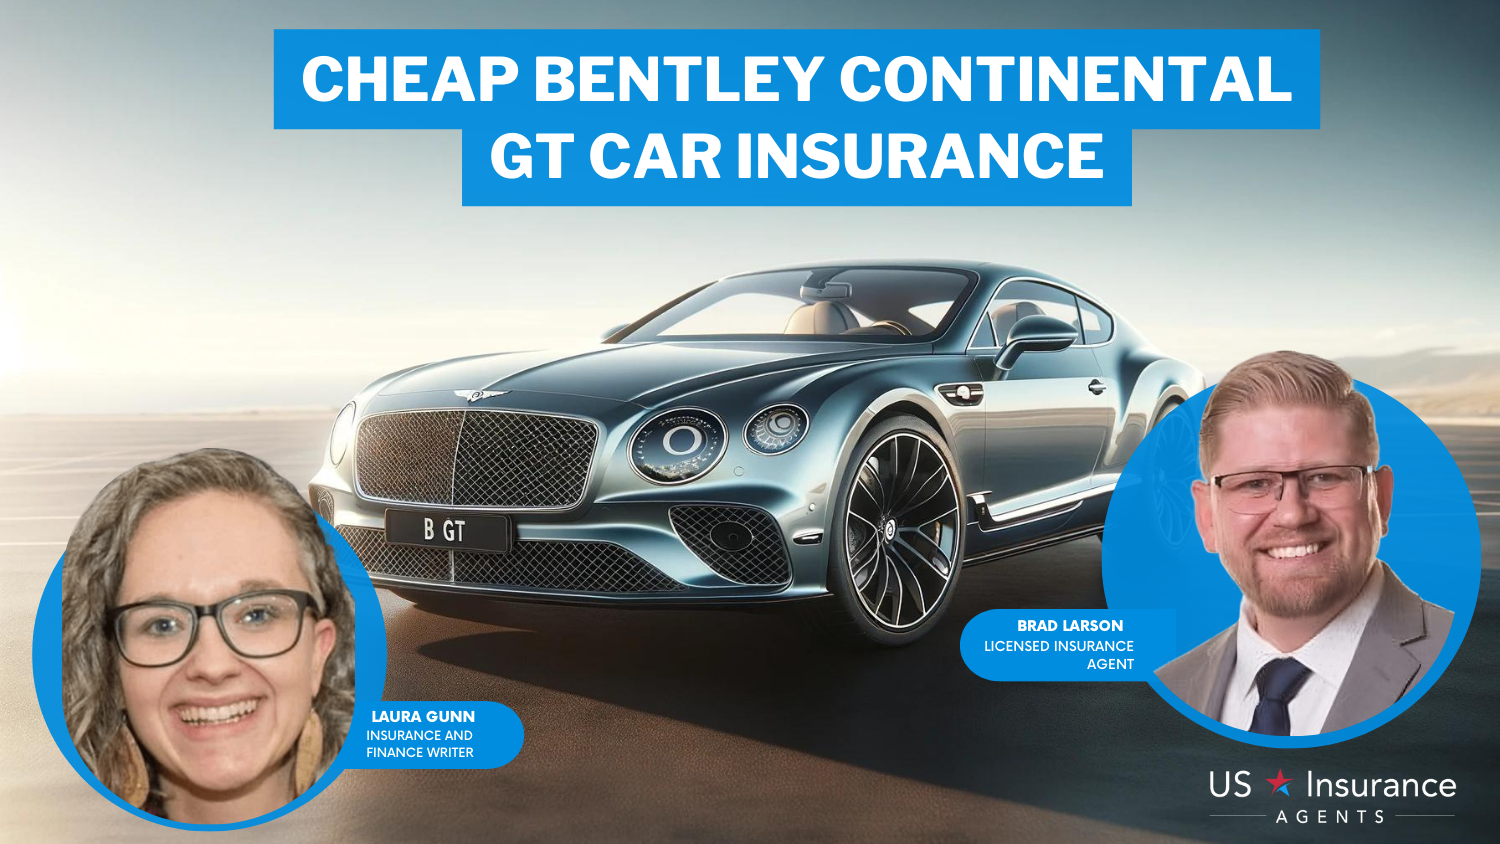 Cheap Bentley Continental GT Car Insurance: State Farm, Progressive, and Chubb